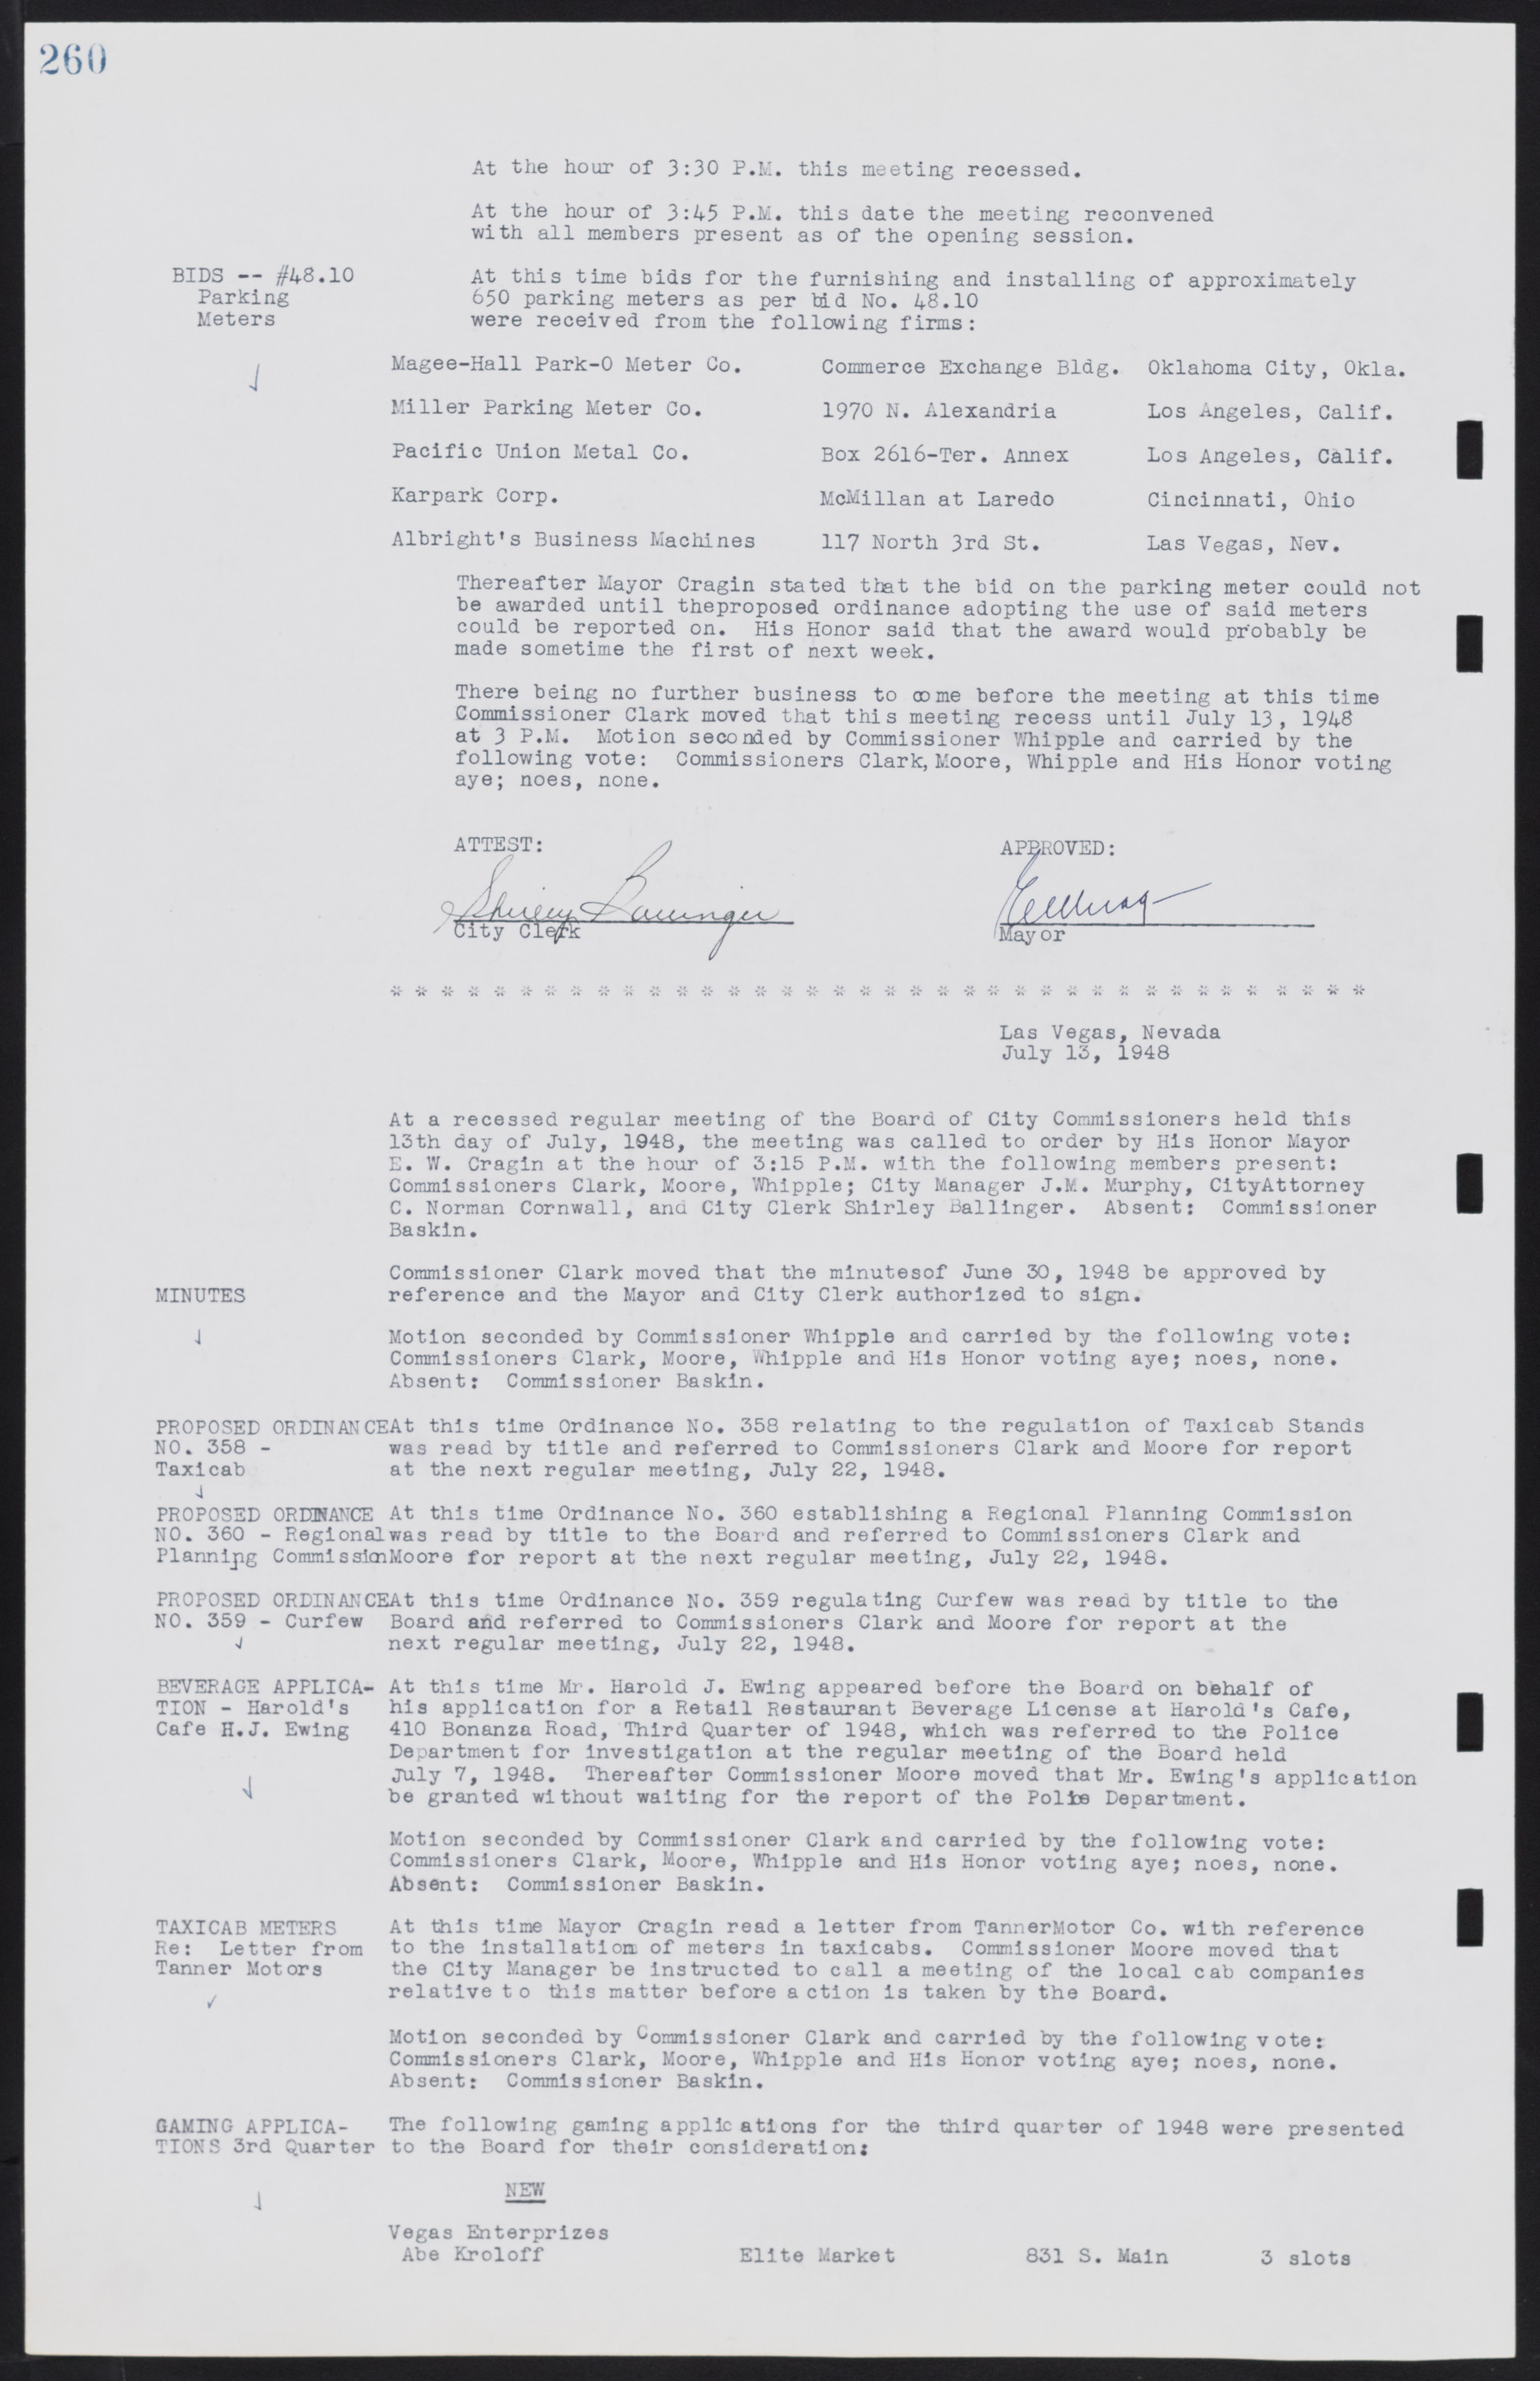 Las Vegas City Commission Minutes, January 7, 1947 to October 26, 1949, lvc000006-284